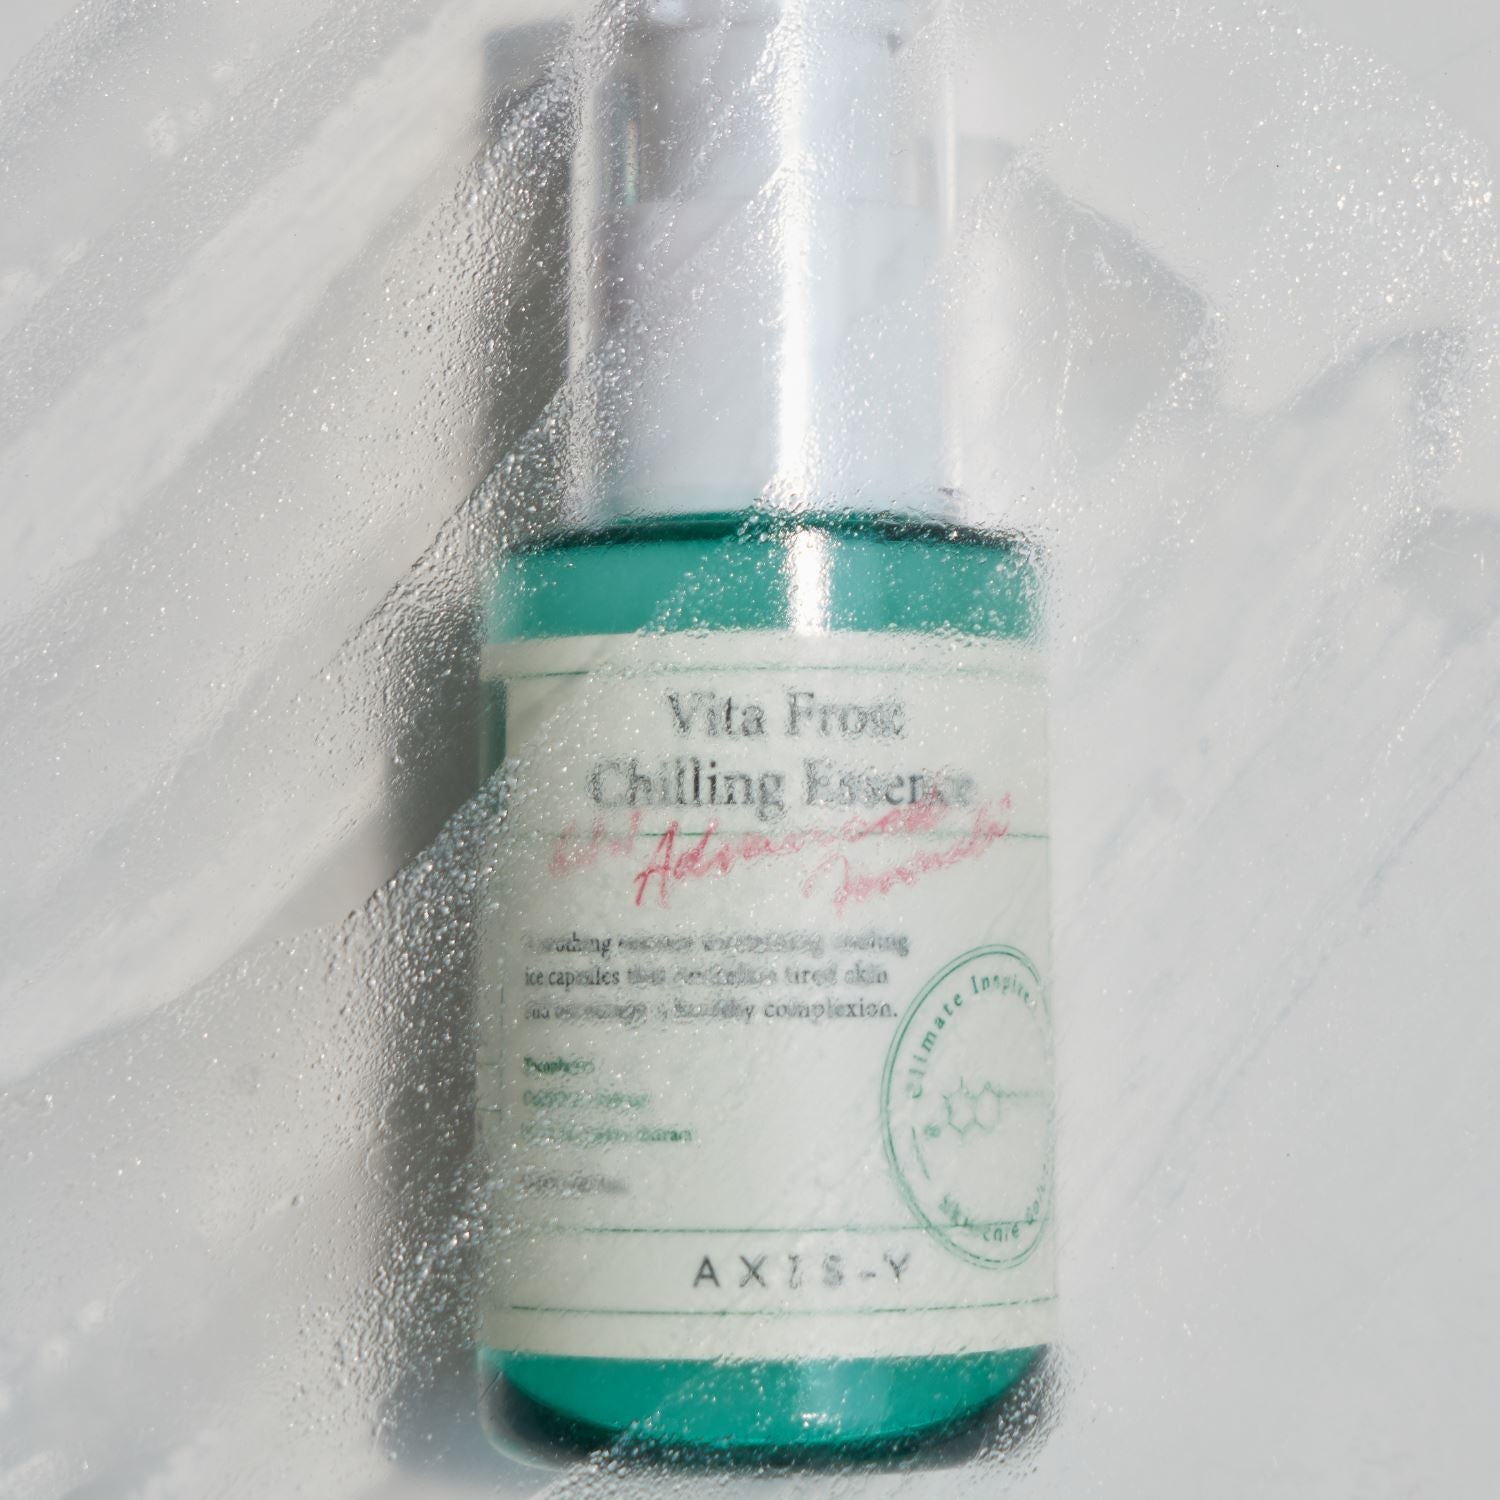 AXIS-Y Vita Frost Chilling Essence 50ml Skin Care AXIS-Y ORION XO Sri Lanka